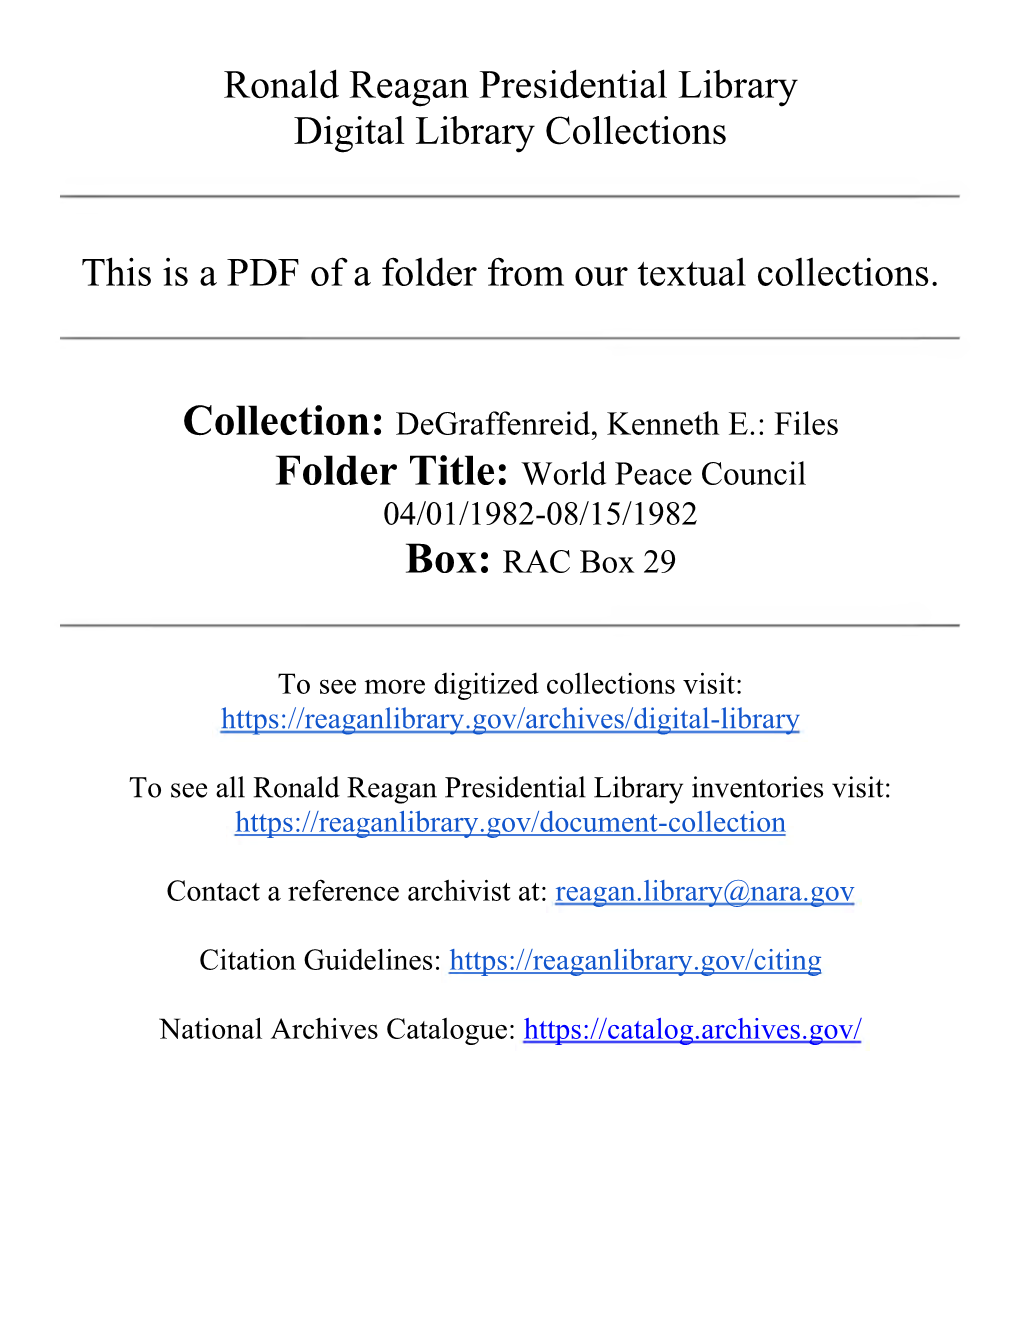 Files Folder Title: World Peace Council 04/01/1982-08/15/1982 Box: RAC Box 29